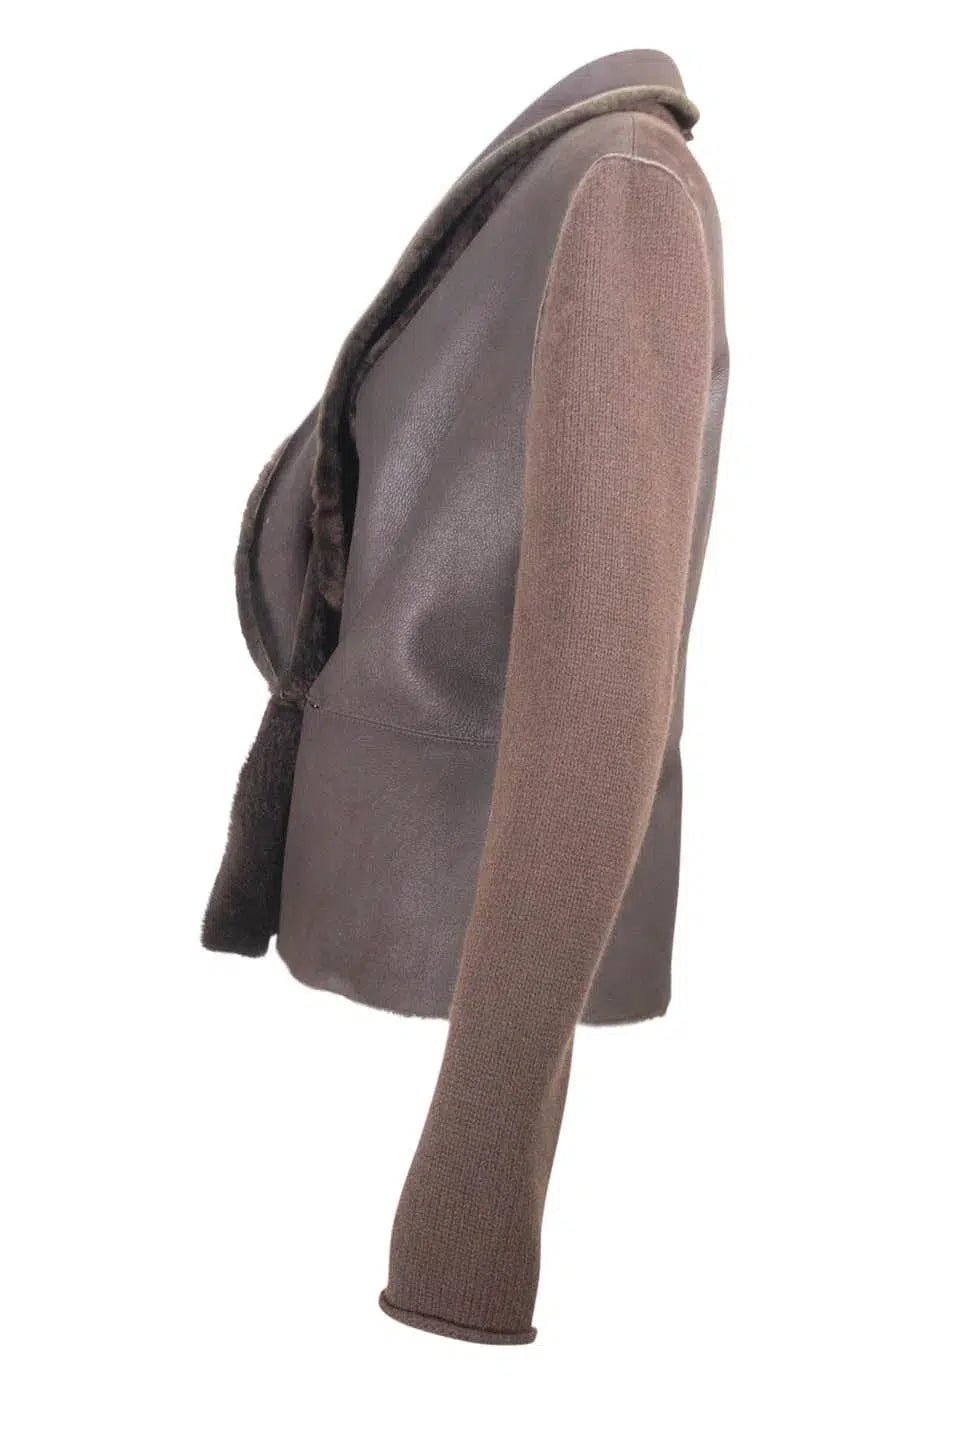 Brunello Cucinelli Brown Shearling Jacket Cashmere Trim Size L